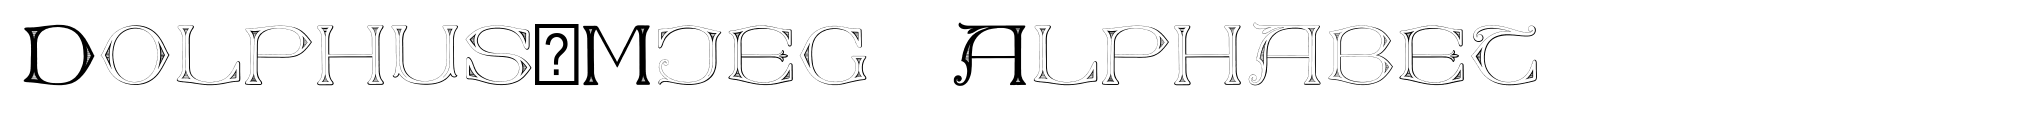 Dolphus-Mieg Alphabet image